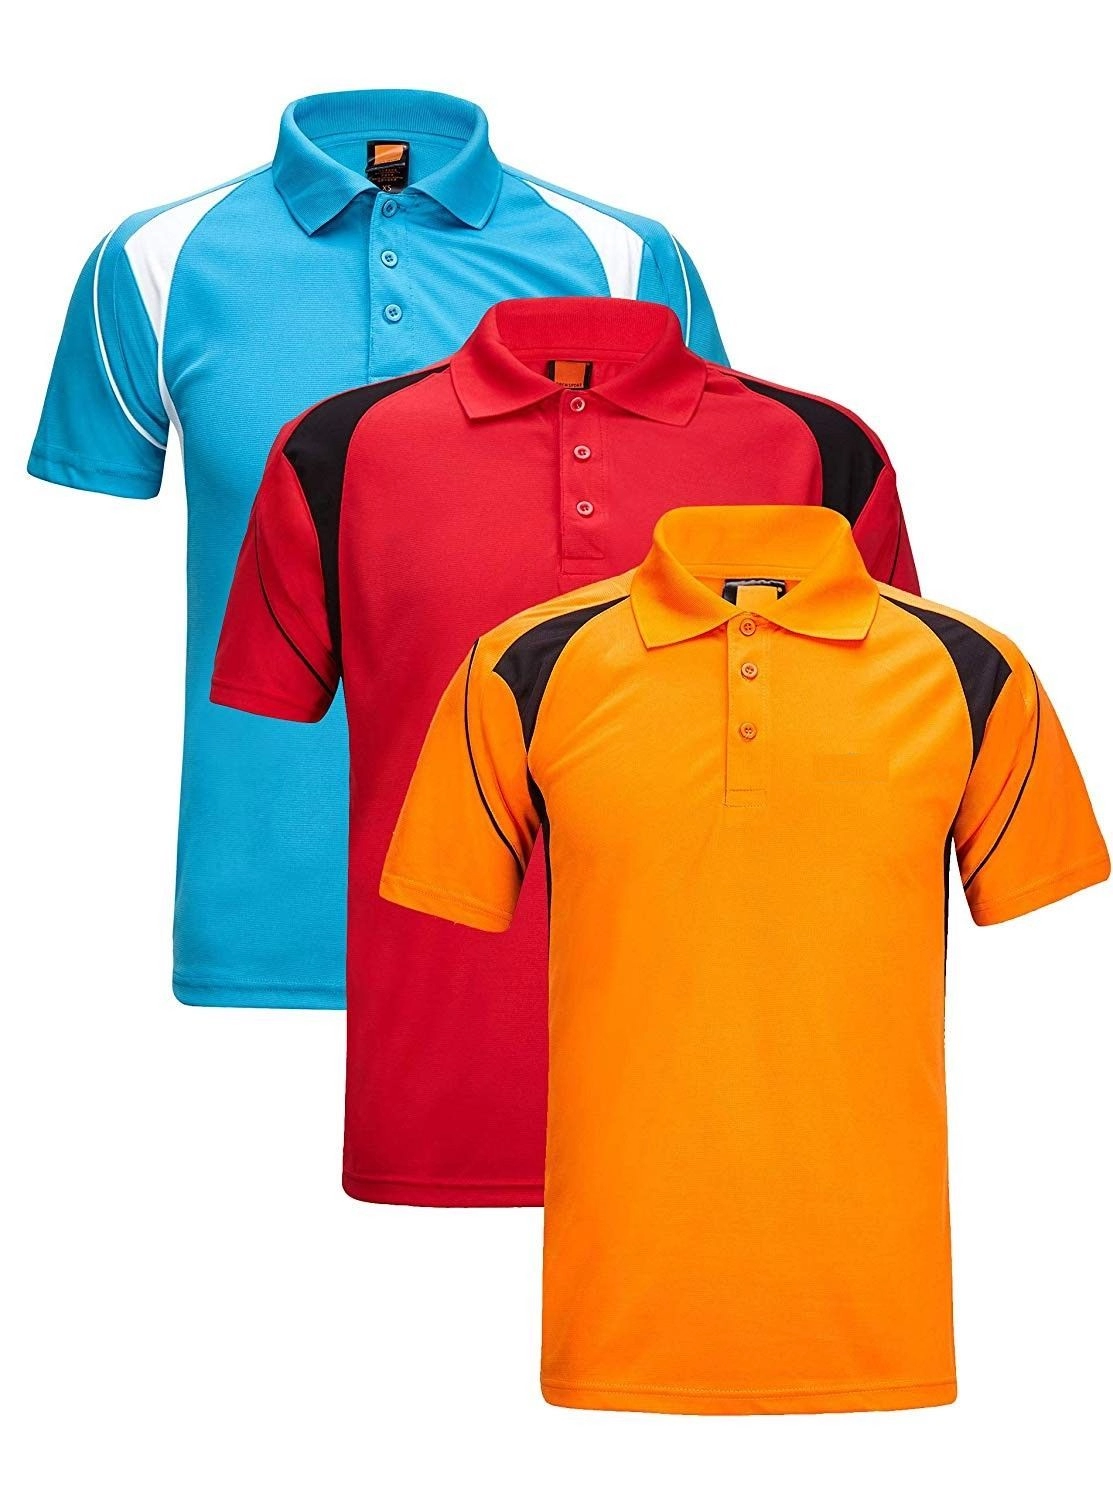 Wholesale Polo Shirts Manufacturer in Bangladesh